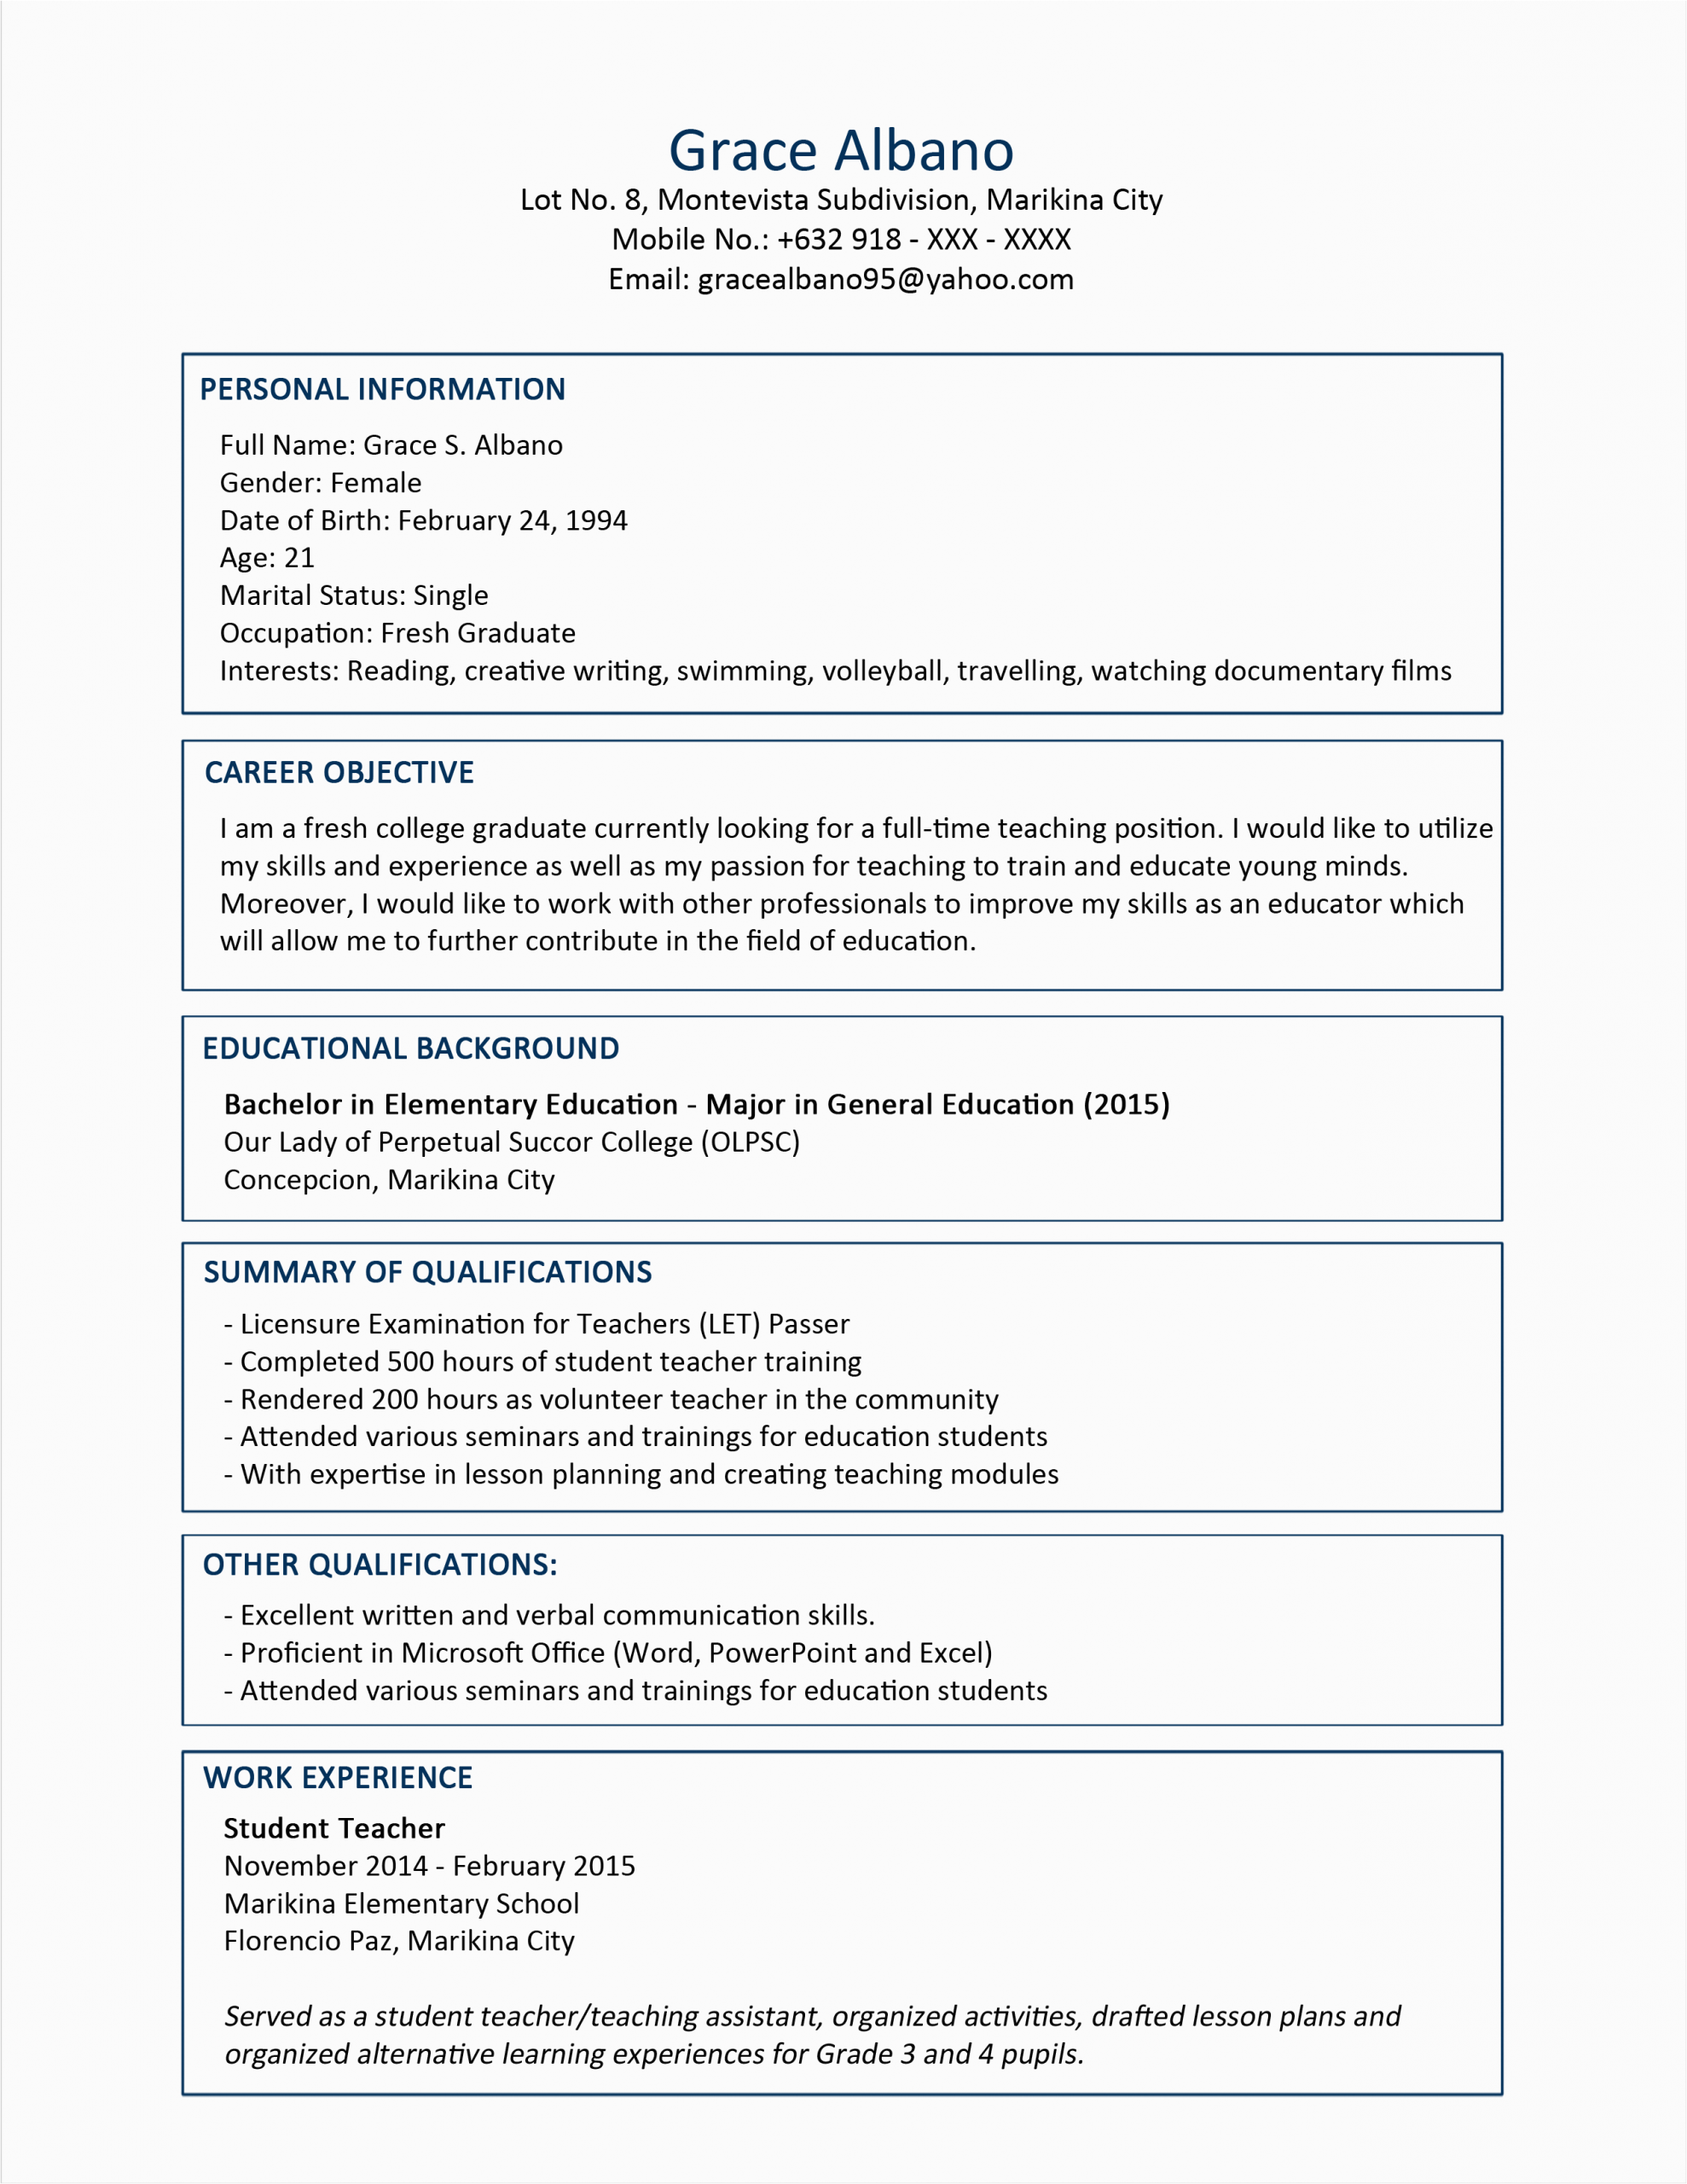 Simple Resume Sample for Fresh Graduate Sample Resume format for Fresh Graduates Two Page format